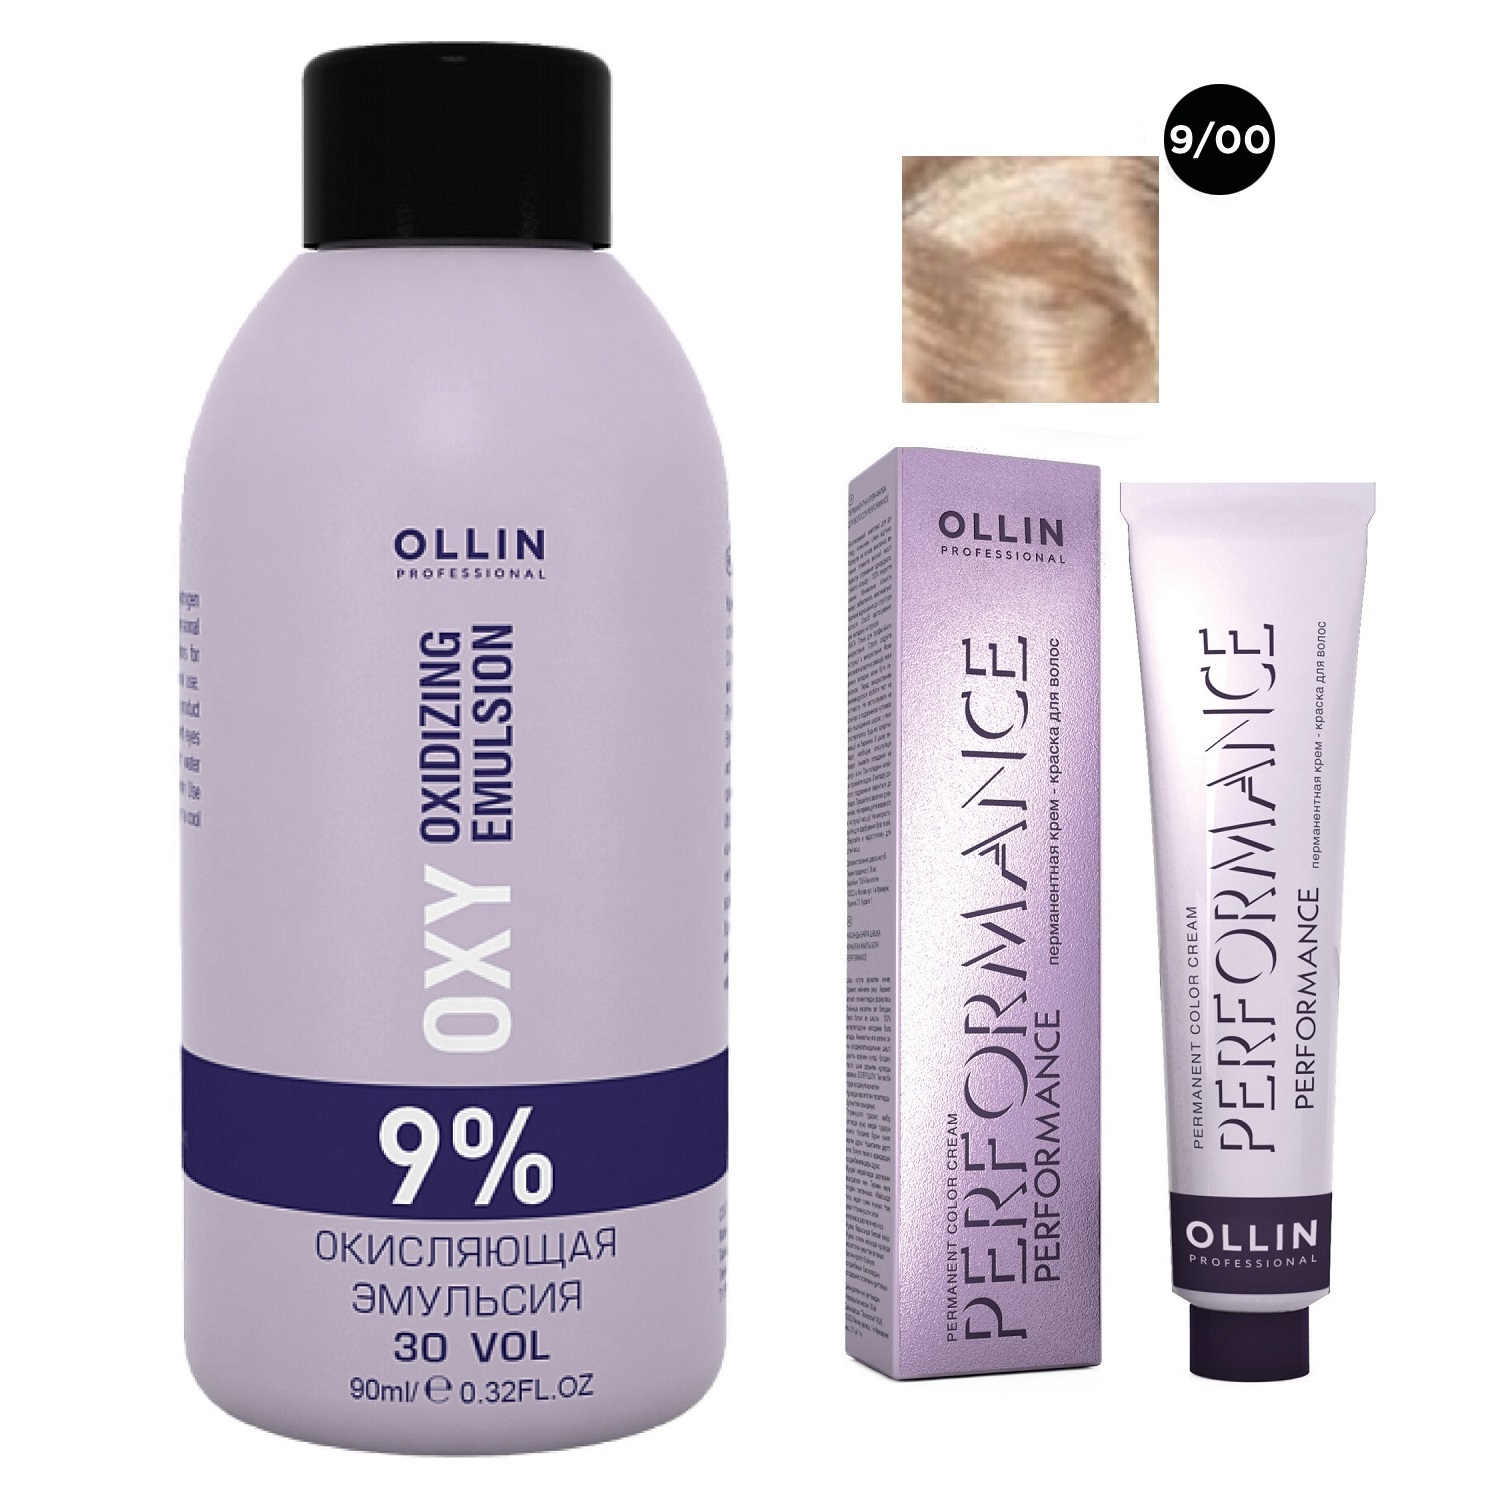 Ollin Professional Набор Перманентная крем-краска для волос Ollin Performance оттенок 9/00 блондин глубокий 60 мл + Окисляющая эмульсия Oxy 9% 90 мл (Ollin Professional, Performance)